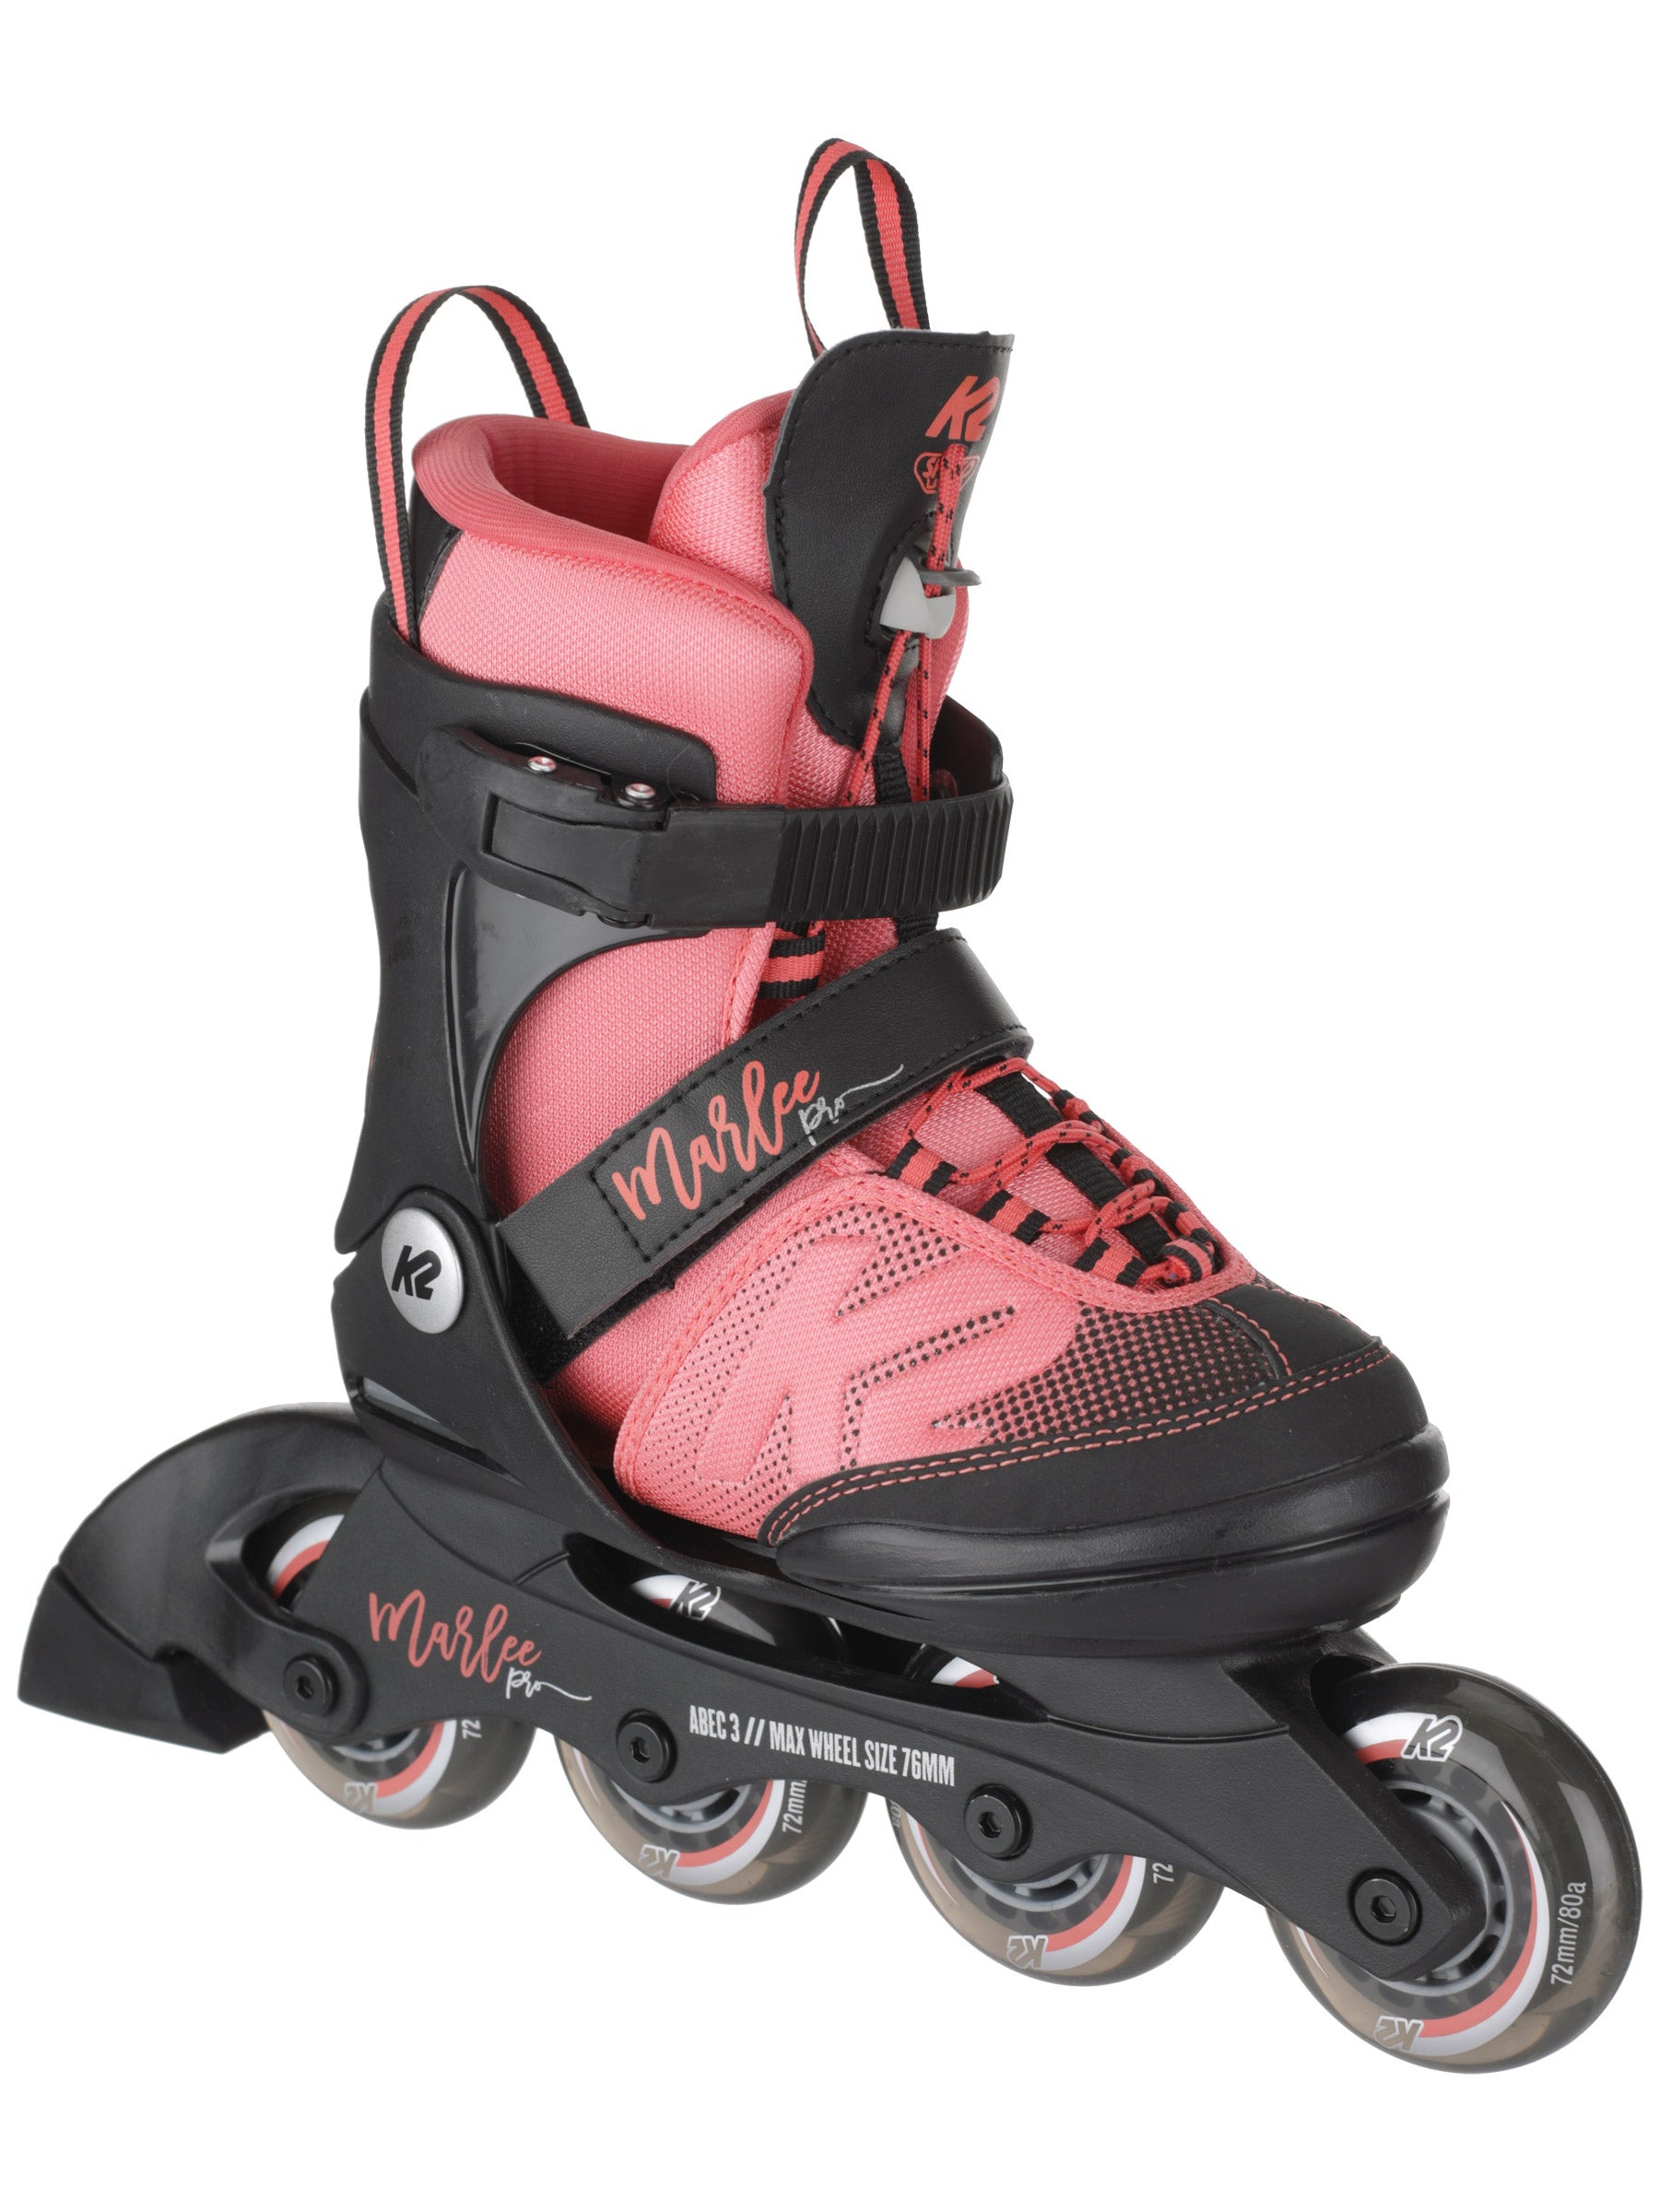 Details about   K2 Marlee Adjustable Rollerblades Inline Skates Girls Youth Size 3-6 